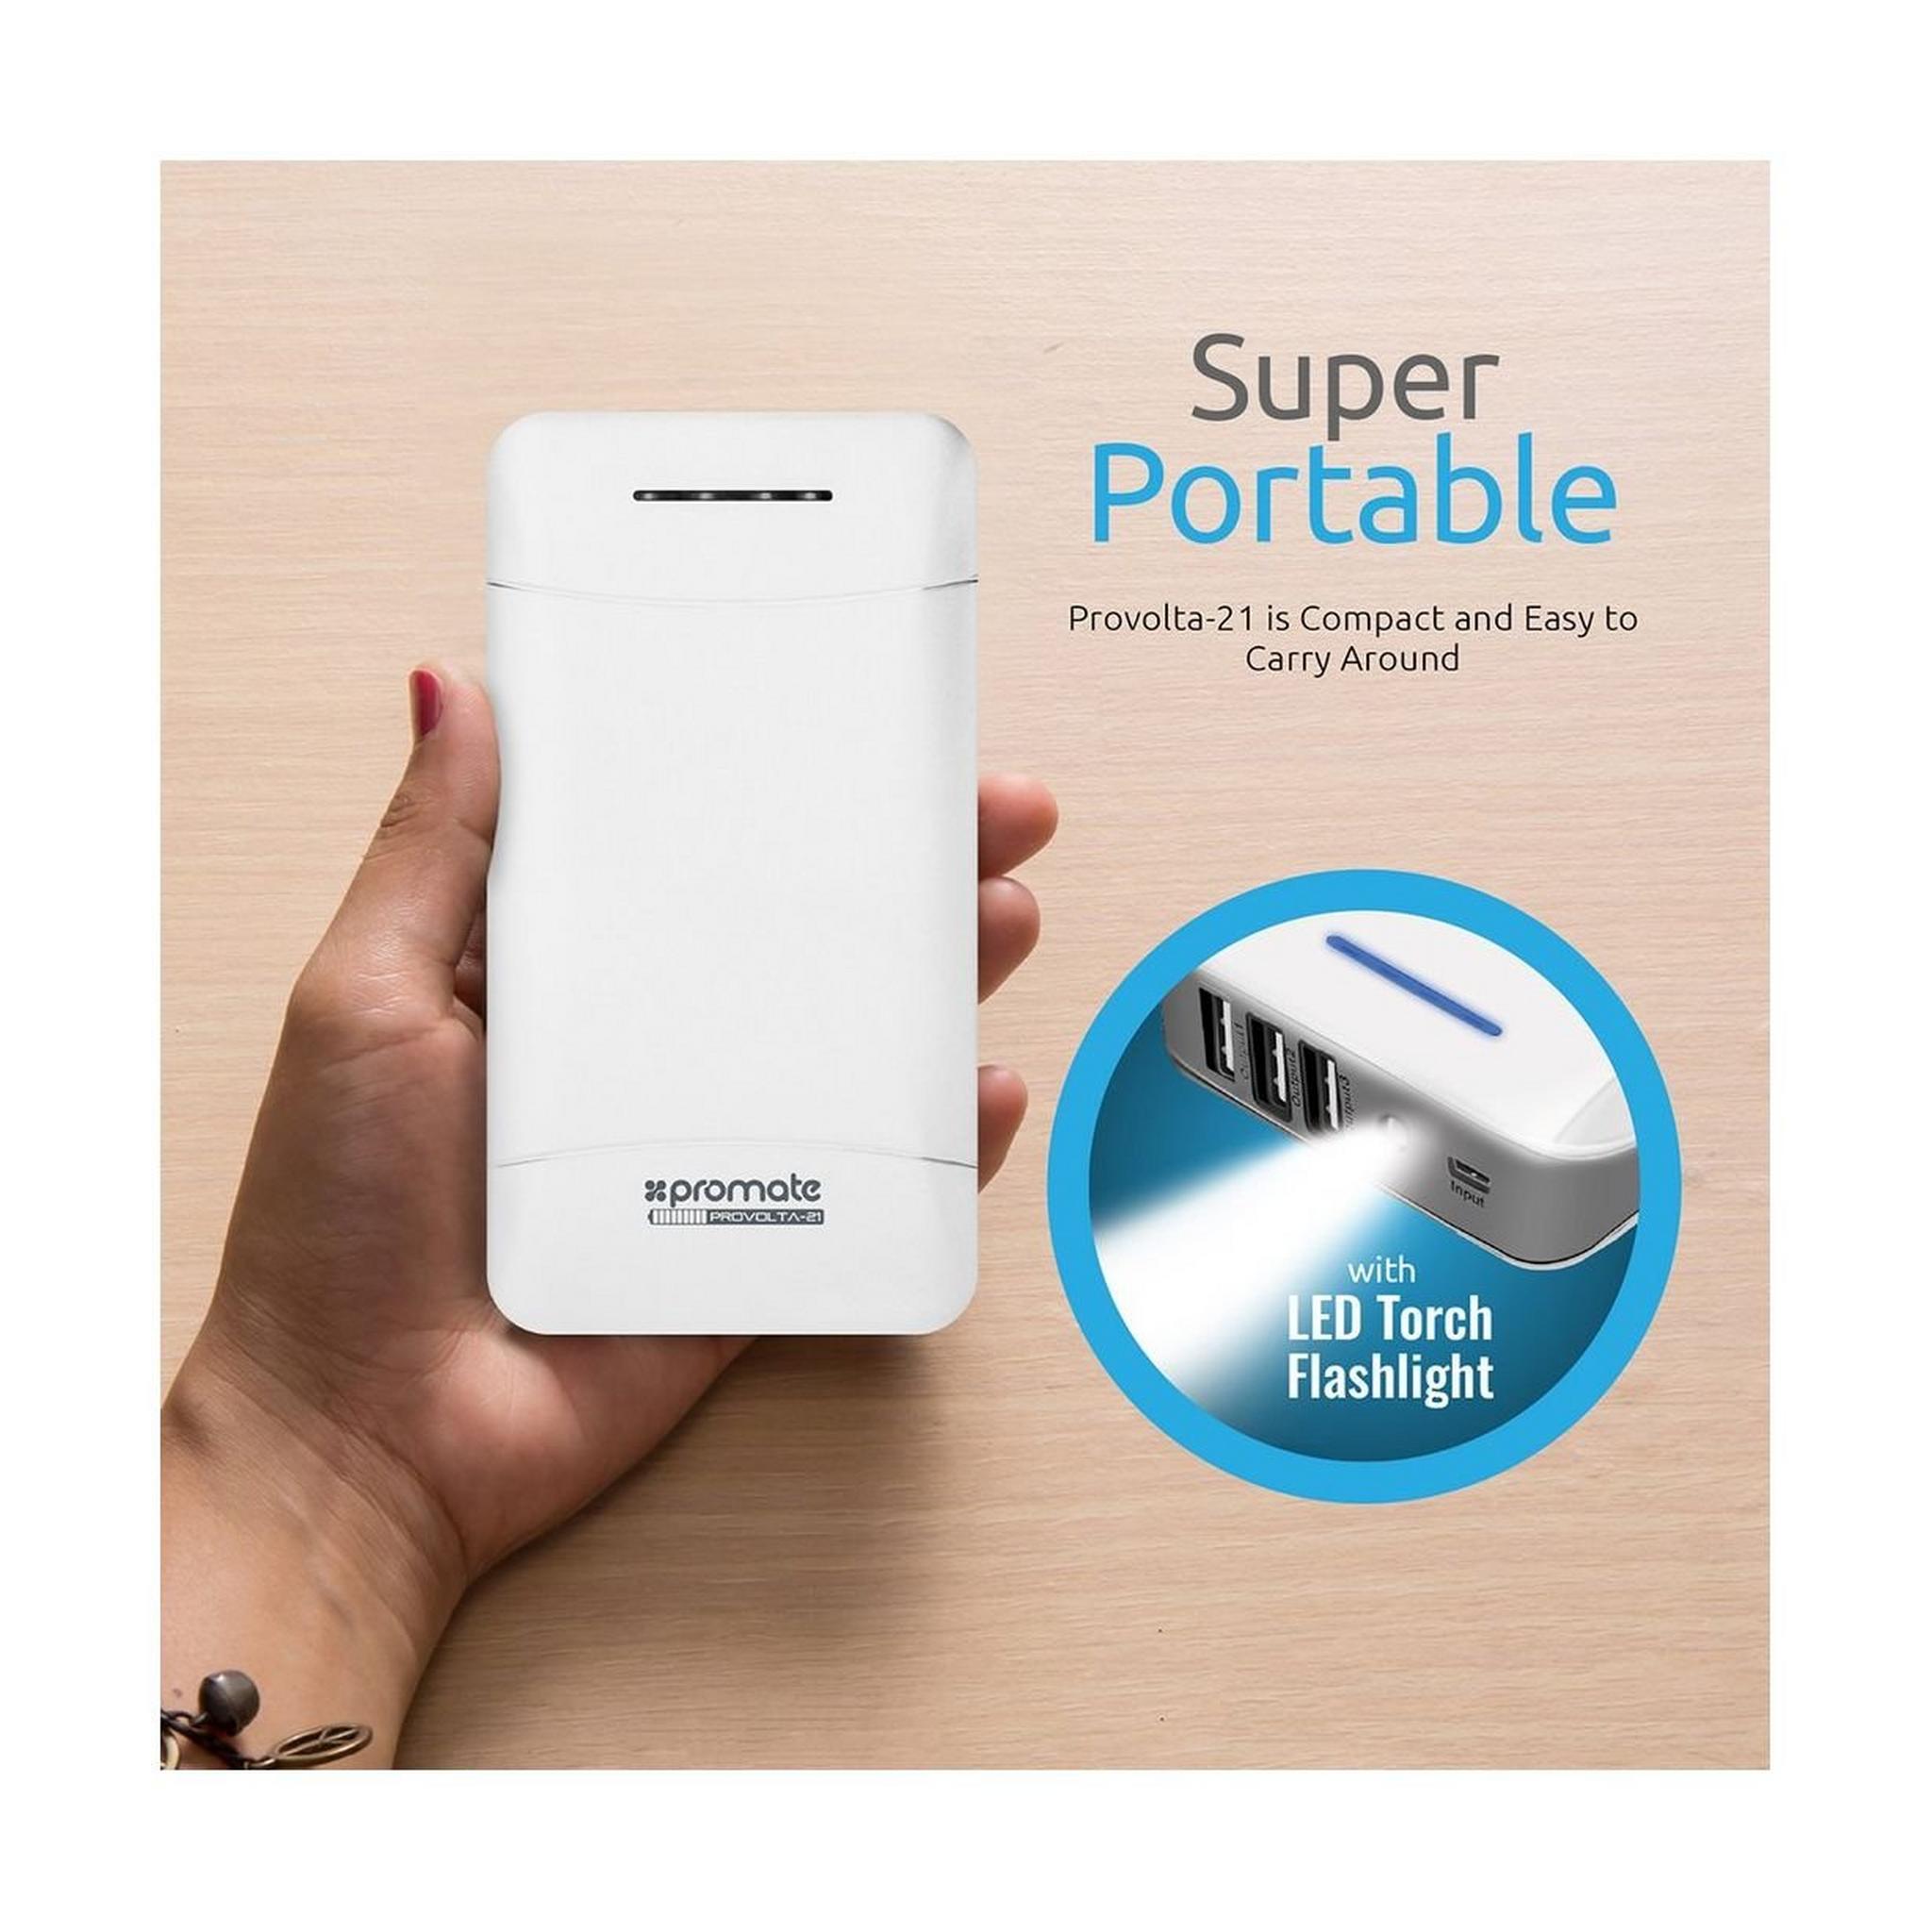 Promate ProVolta-21 20,800mAh Portable High Capacity Power Bank - White